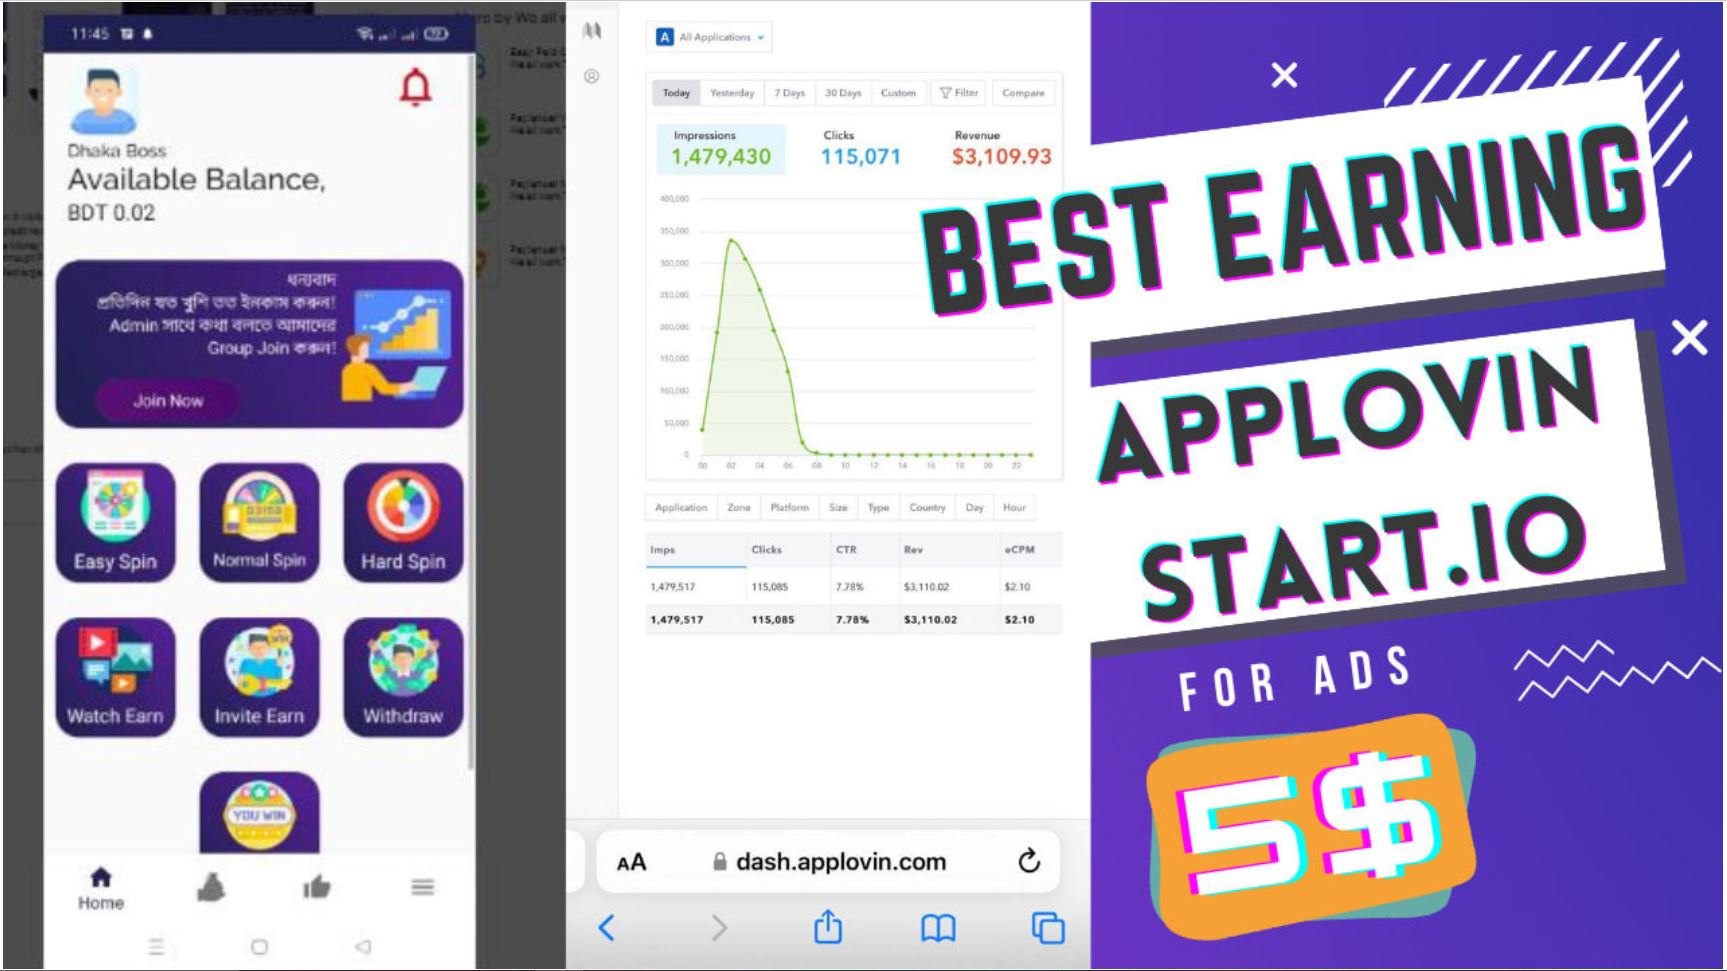 I will do 5 task passive earning app for lifetime max by applovin, FiverrBox